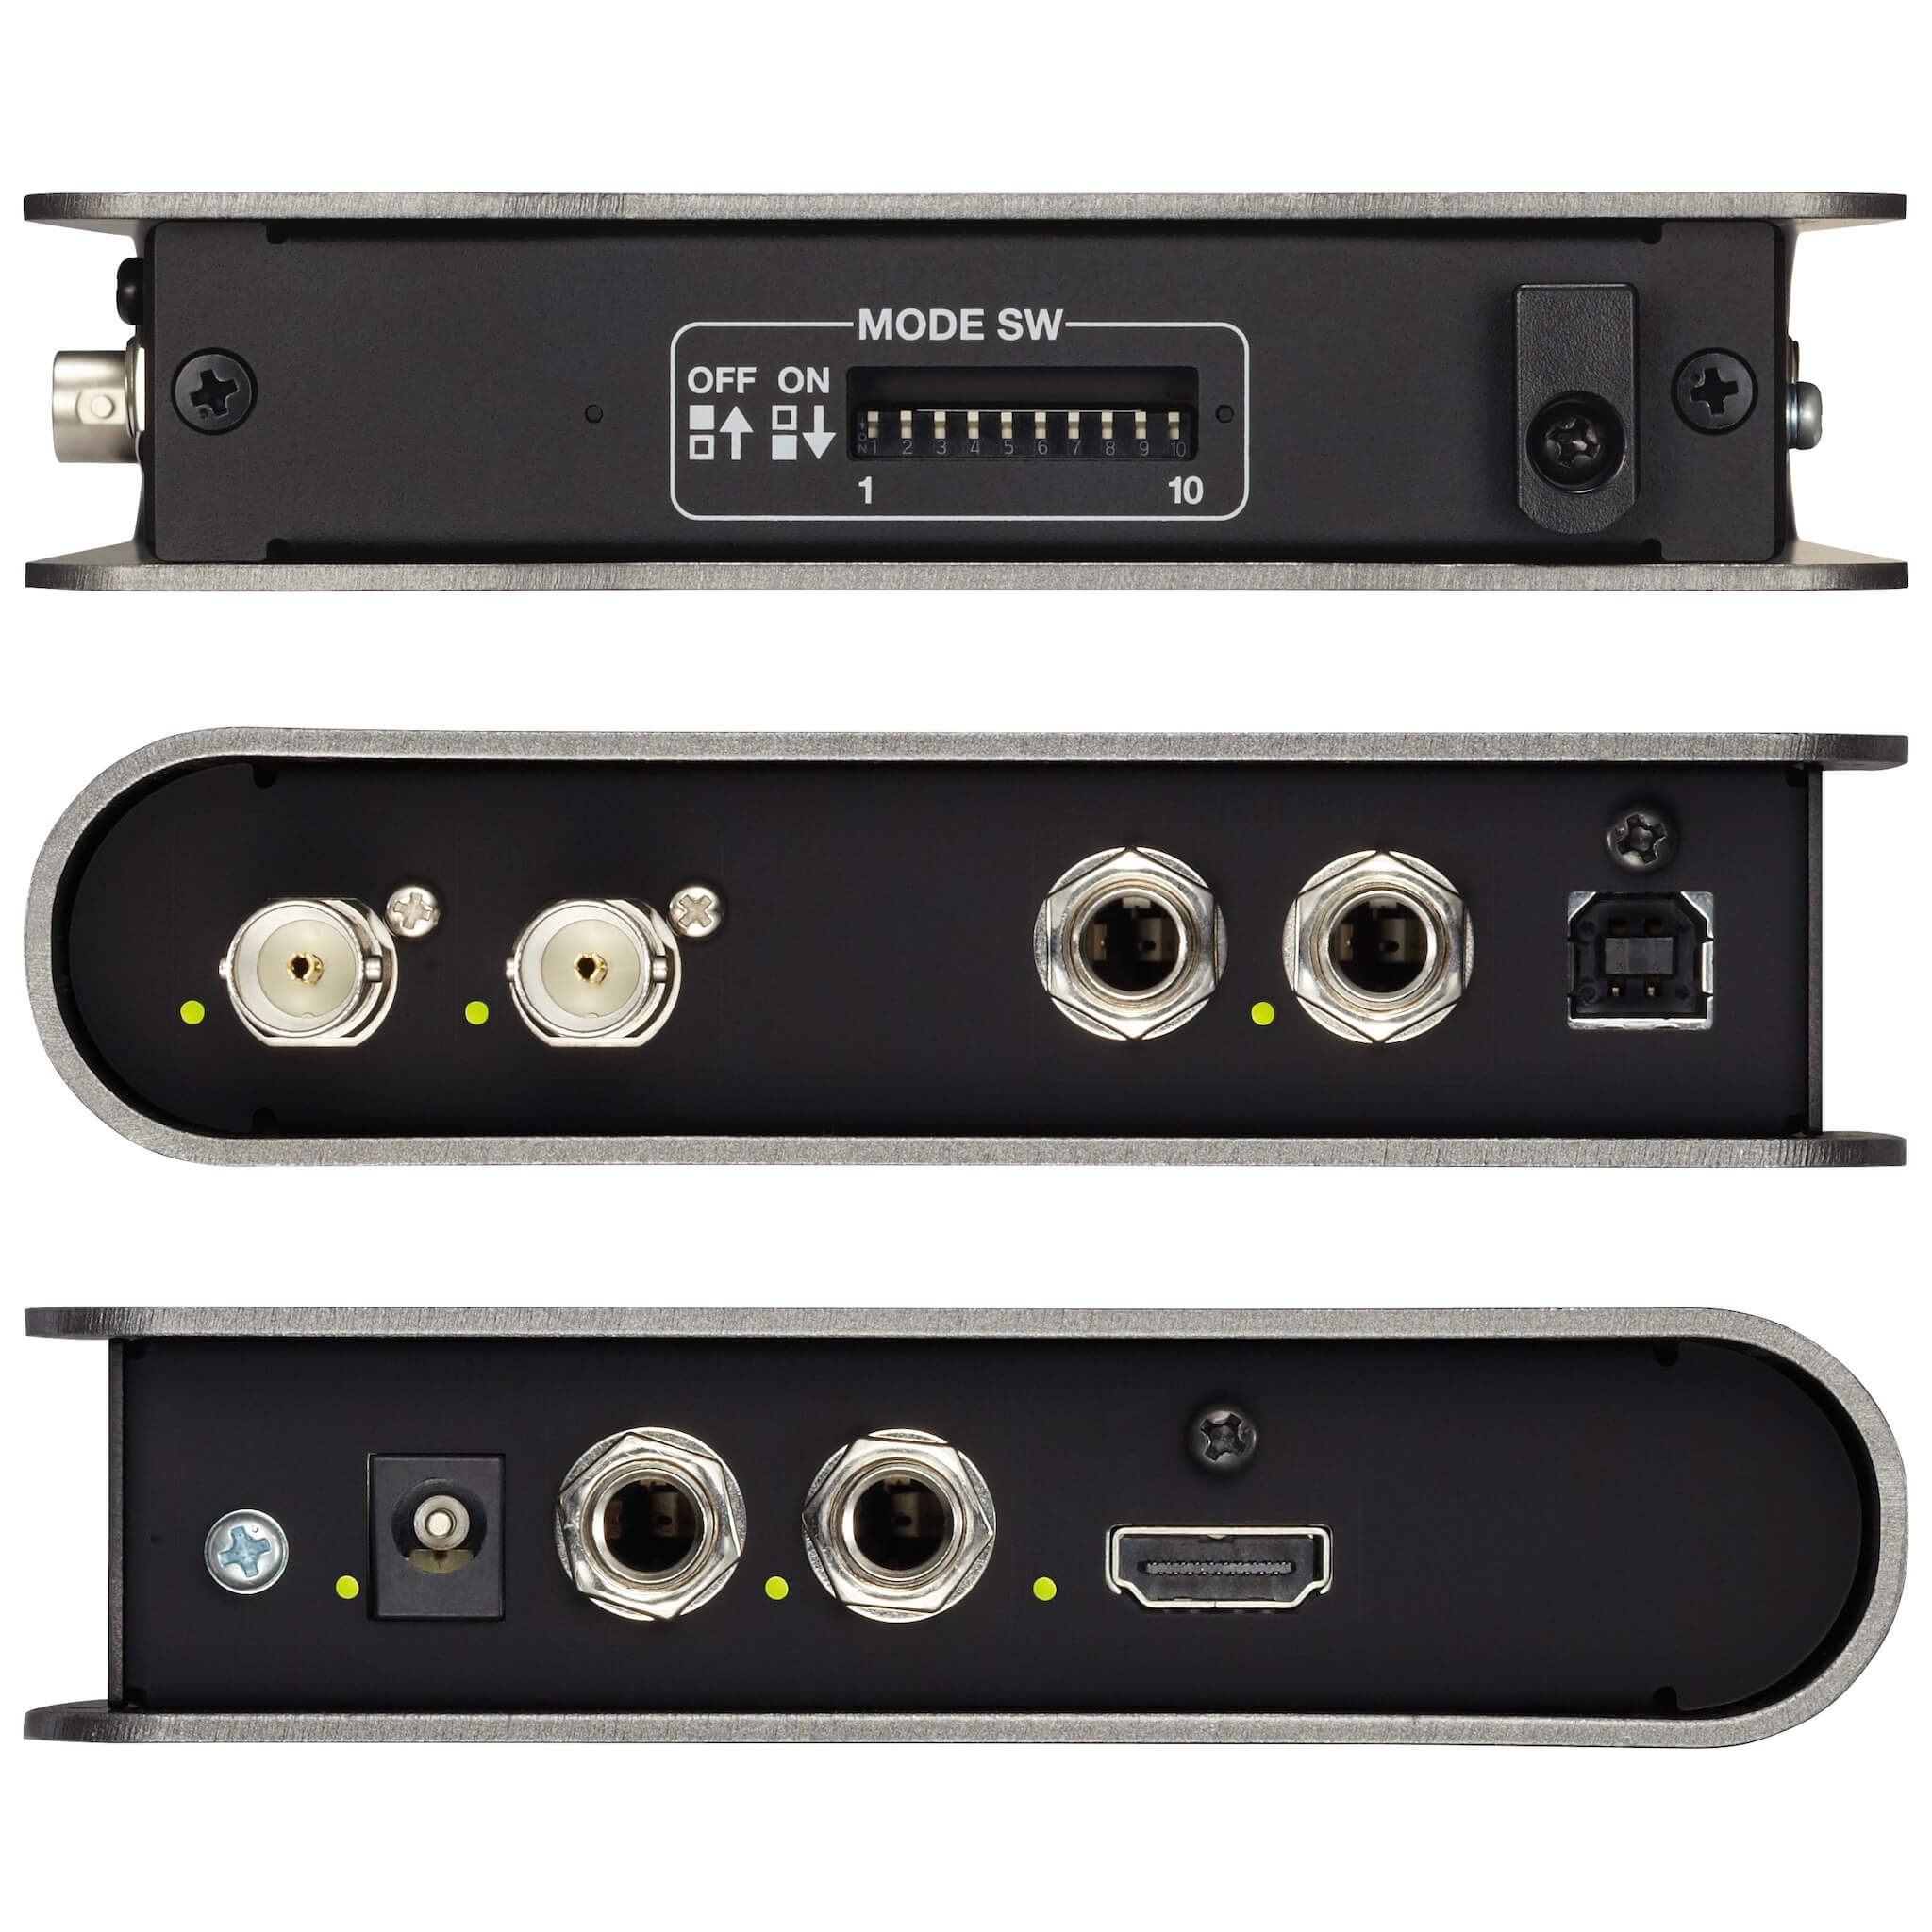 Roland VC-1-SH - SDI to HDMI Video Converter, sides